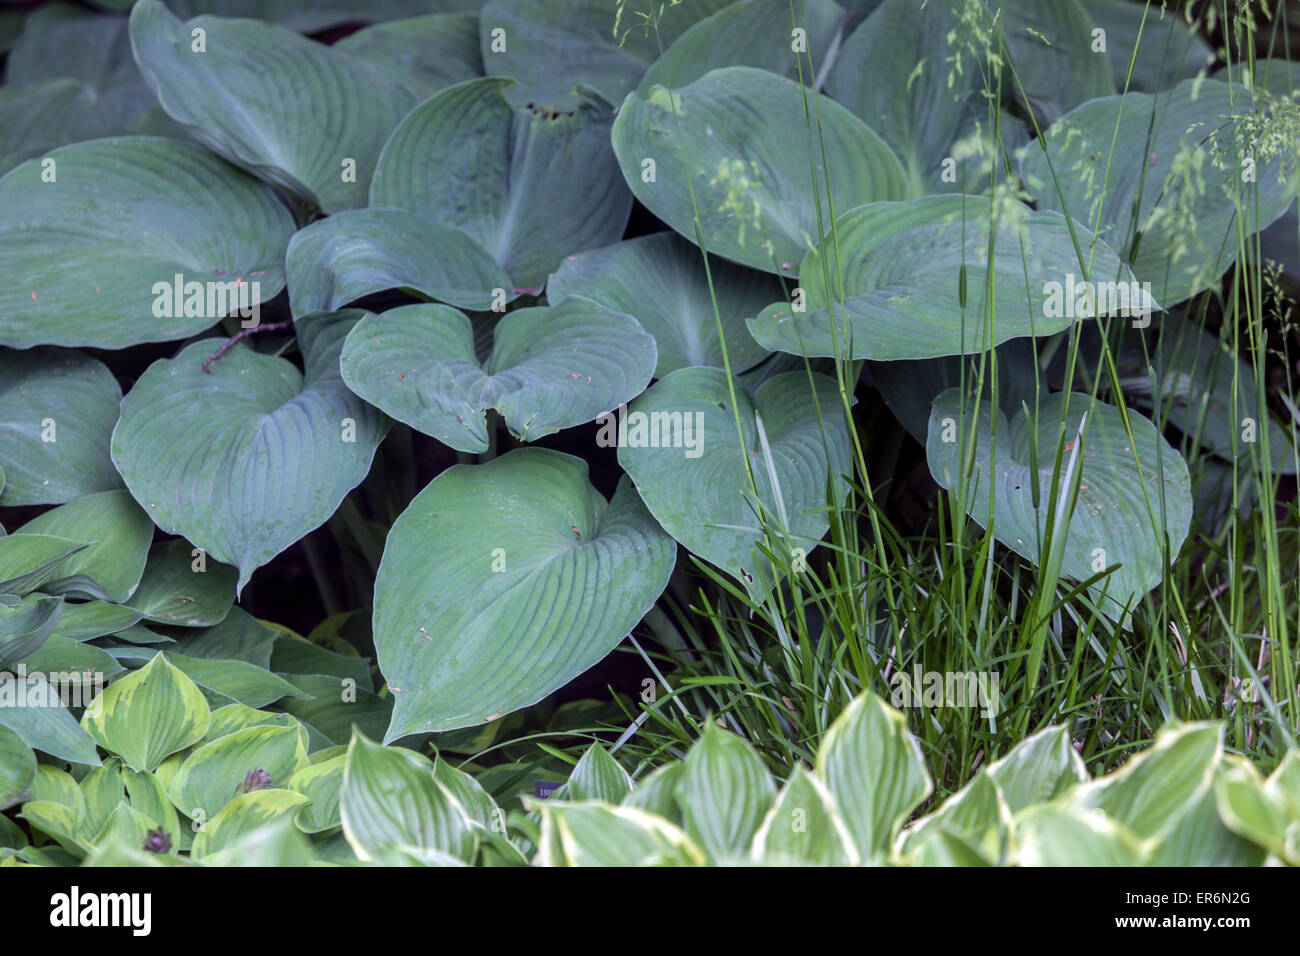 Pflanze mit dekorativem und dekorativem Laub - Hosta Bkue Mammoth, dekoratives Laub Stockfoto